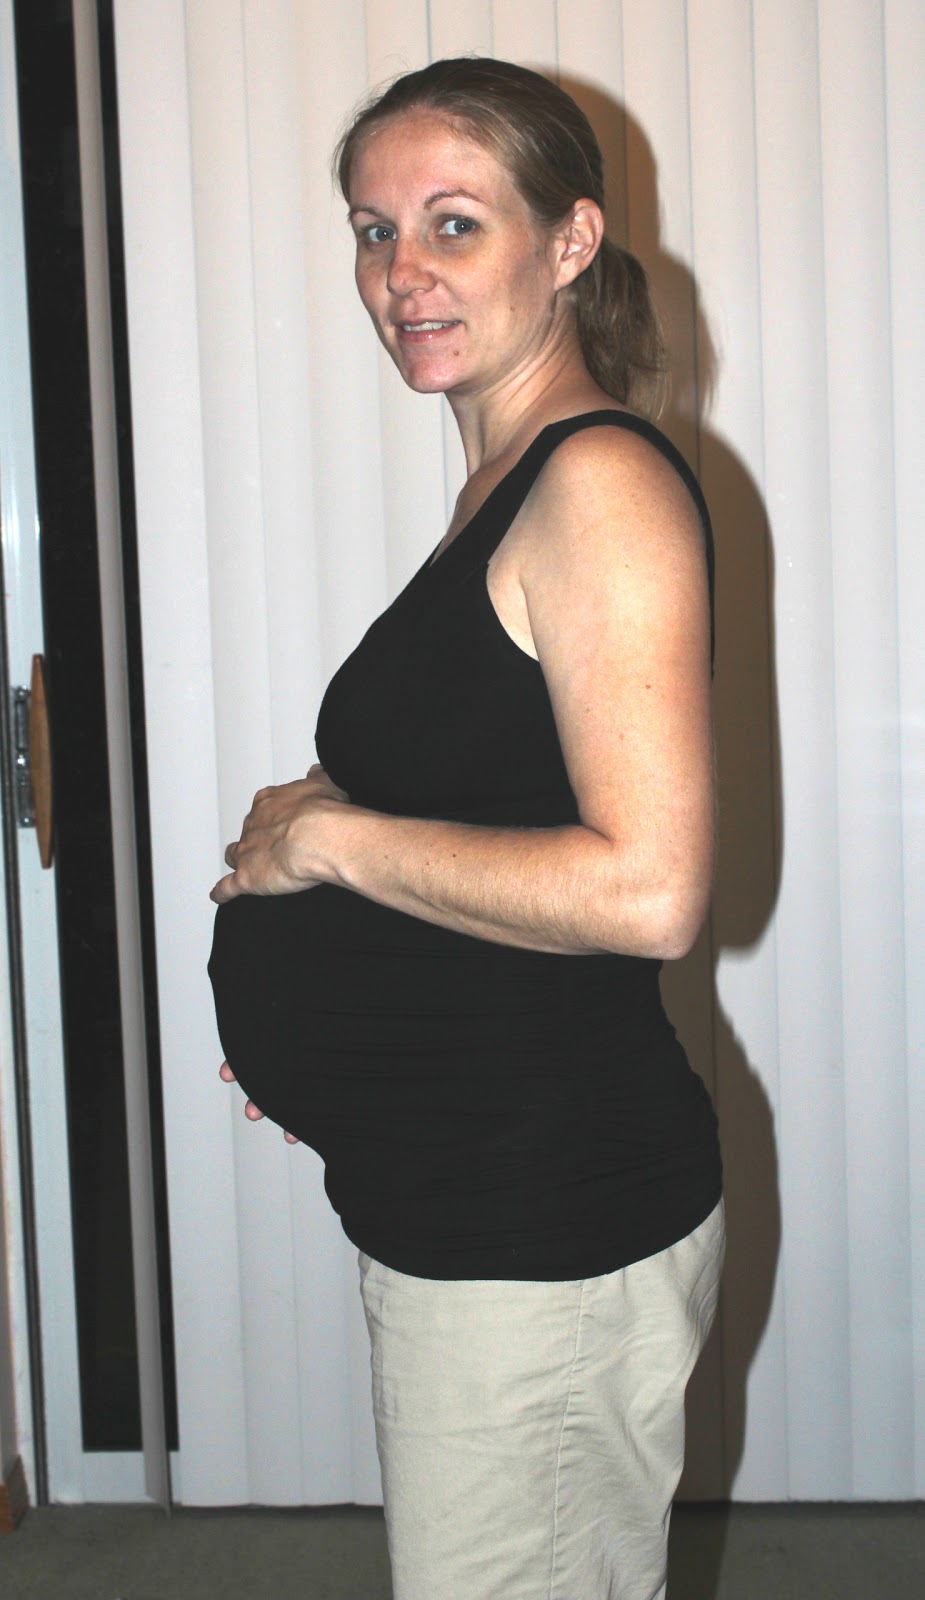 Dream Of Being Pregnant Spiritual Pregnant 43 Statistics